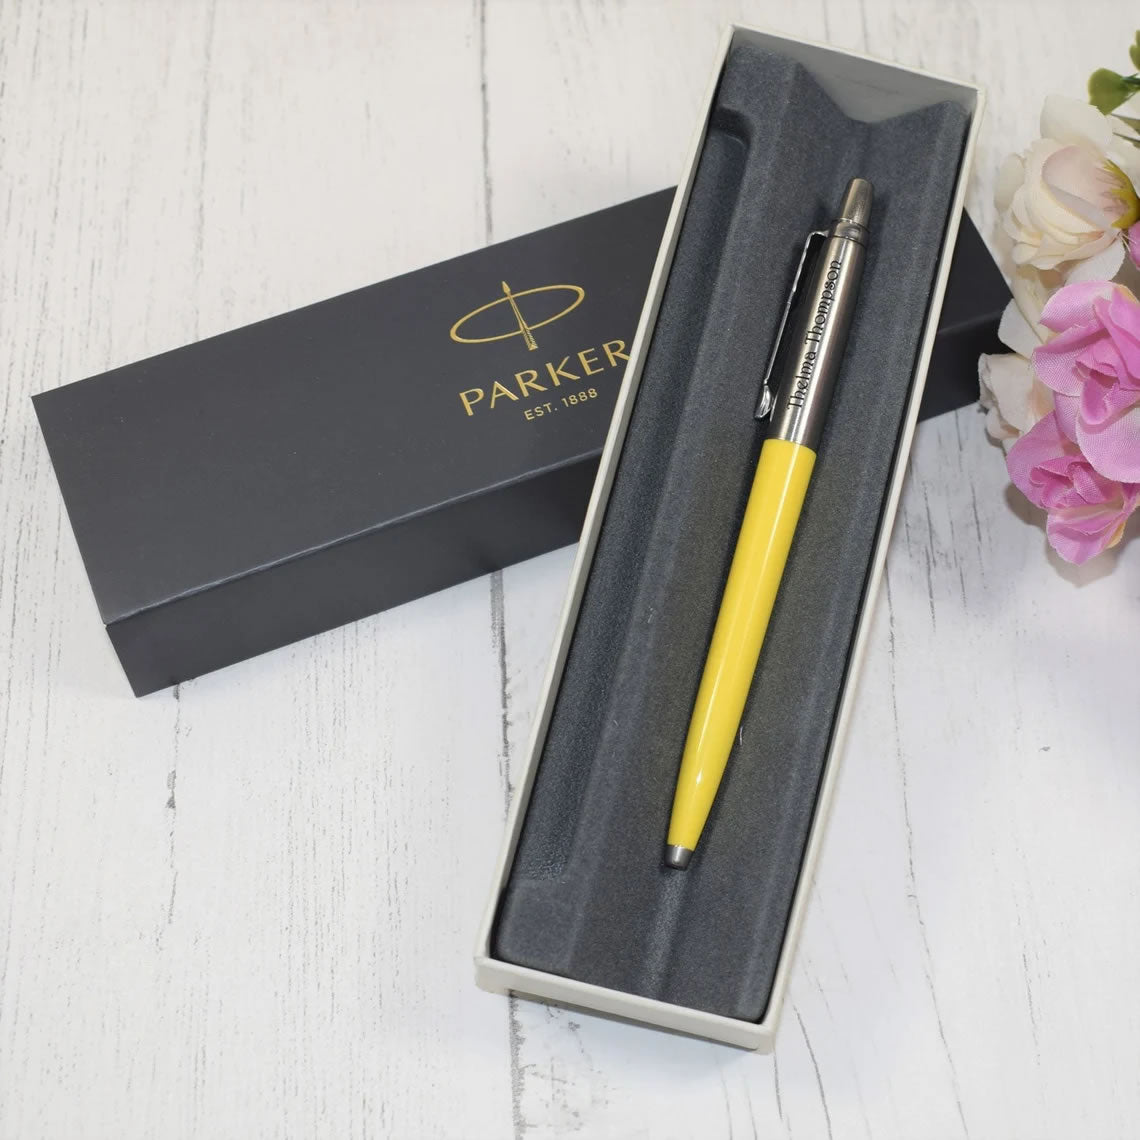 Personalised Originals Yellow Parker Jotter Pen